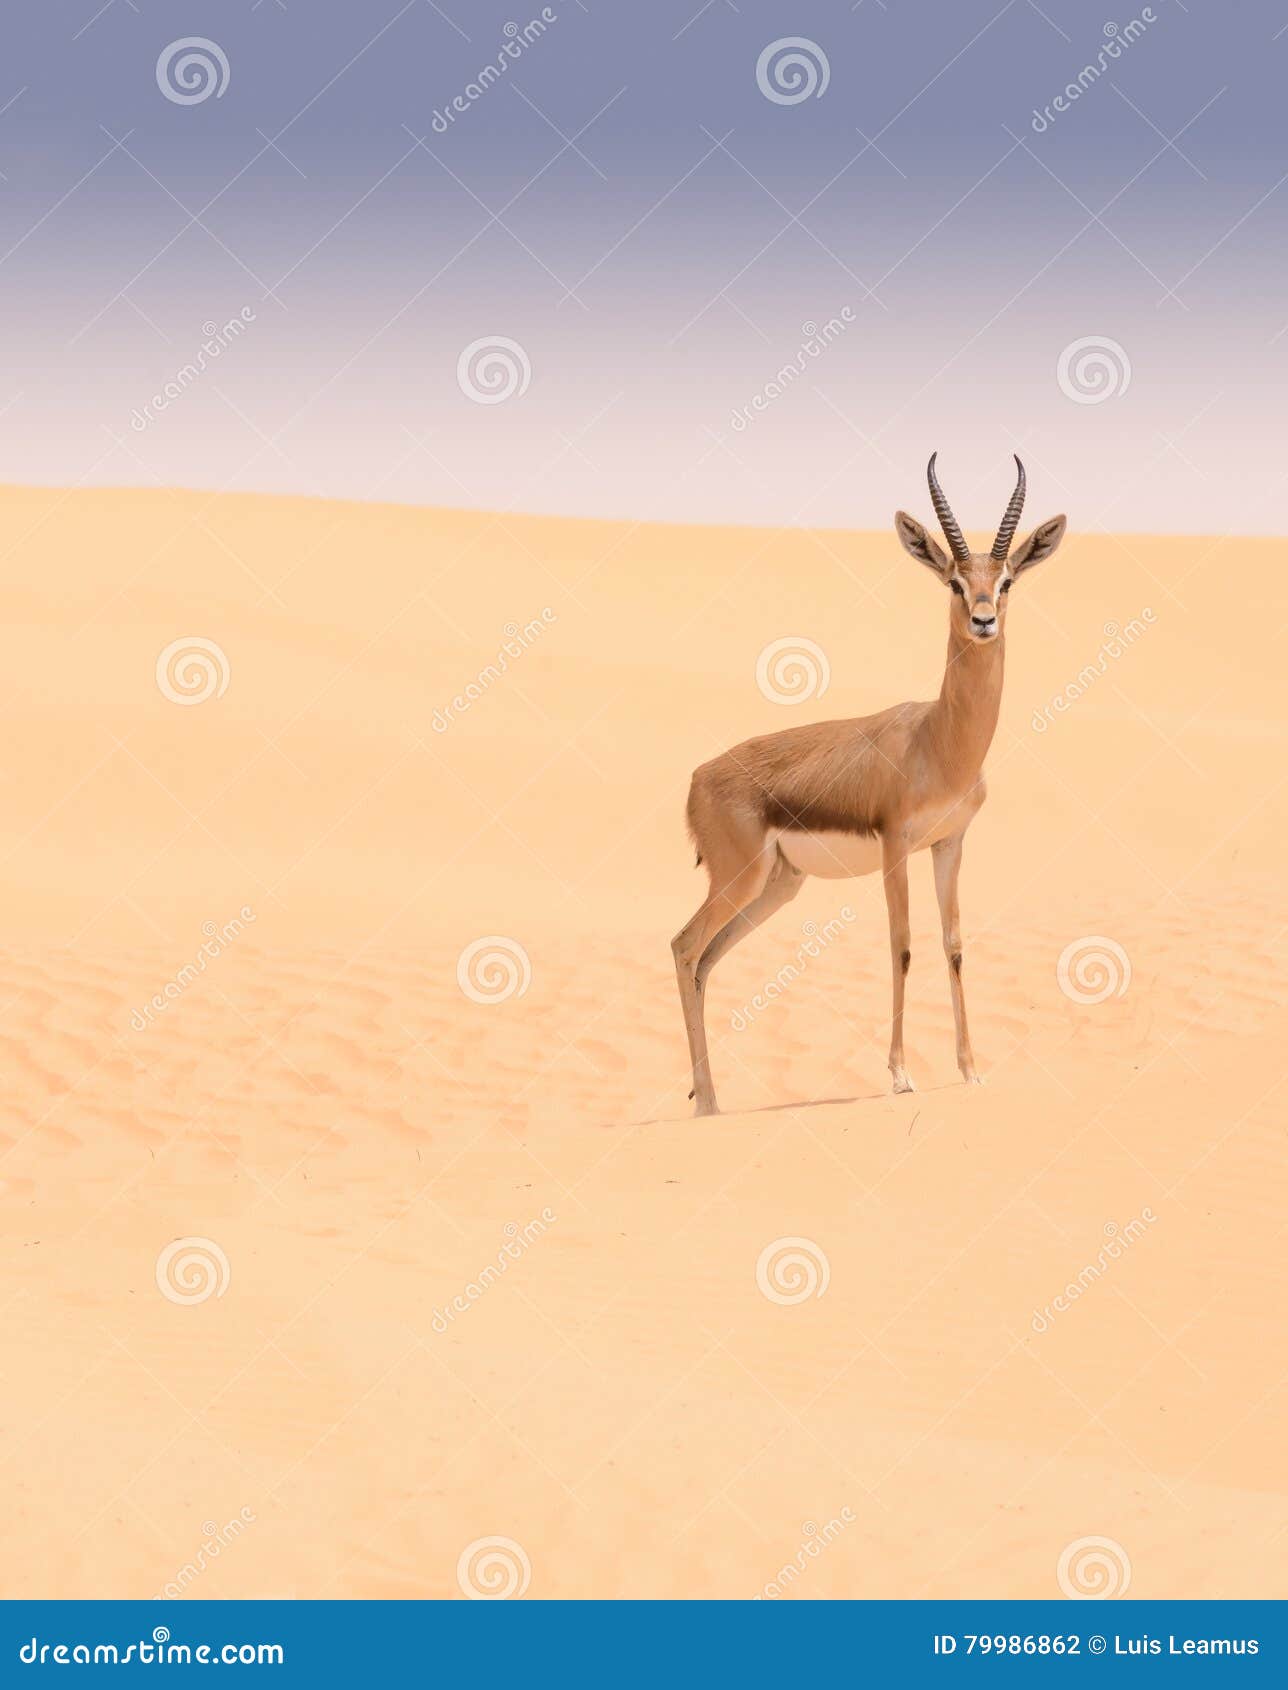 arabian gazelle, dubai desert conservation area, uae